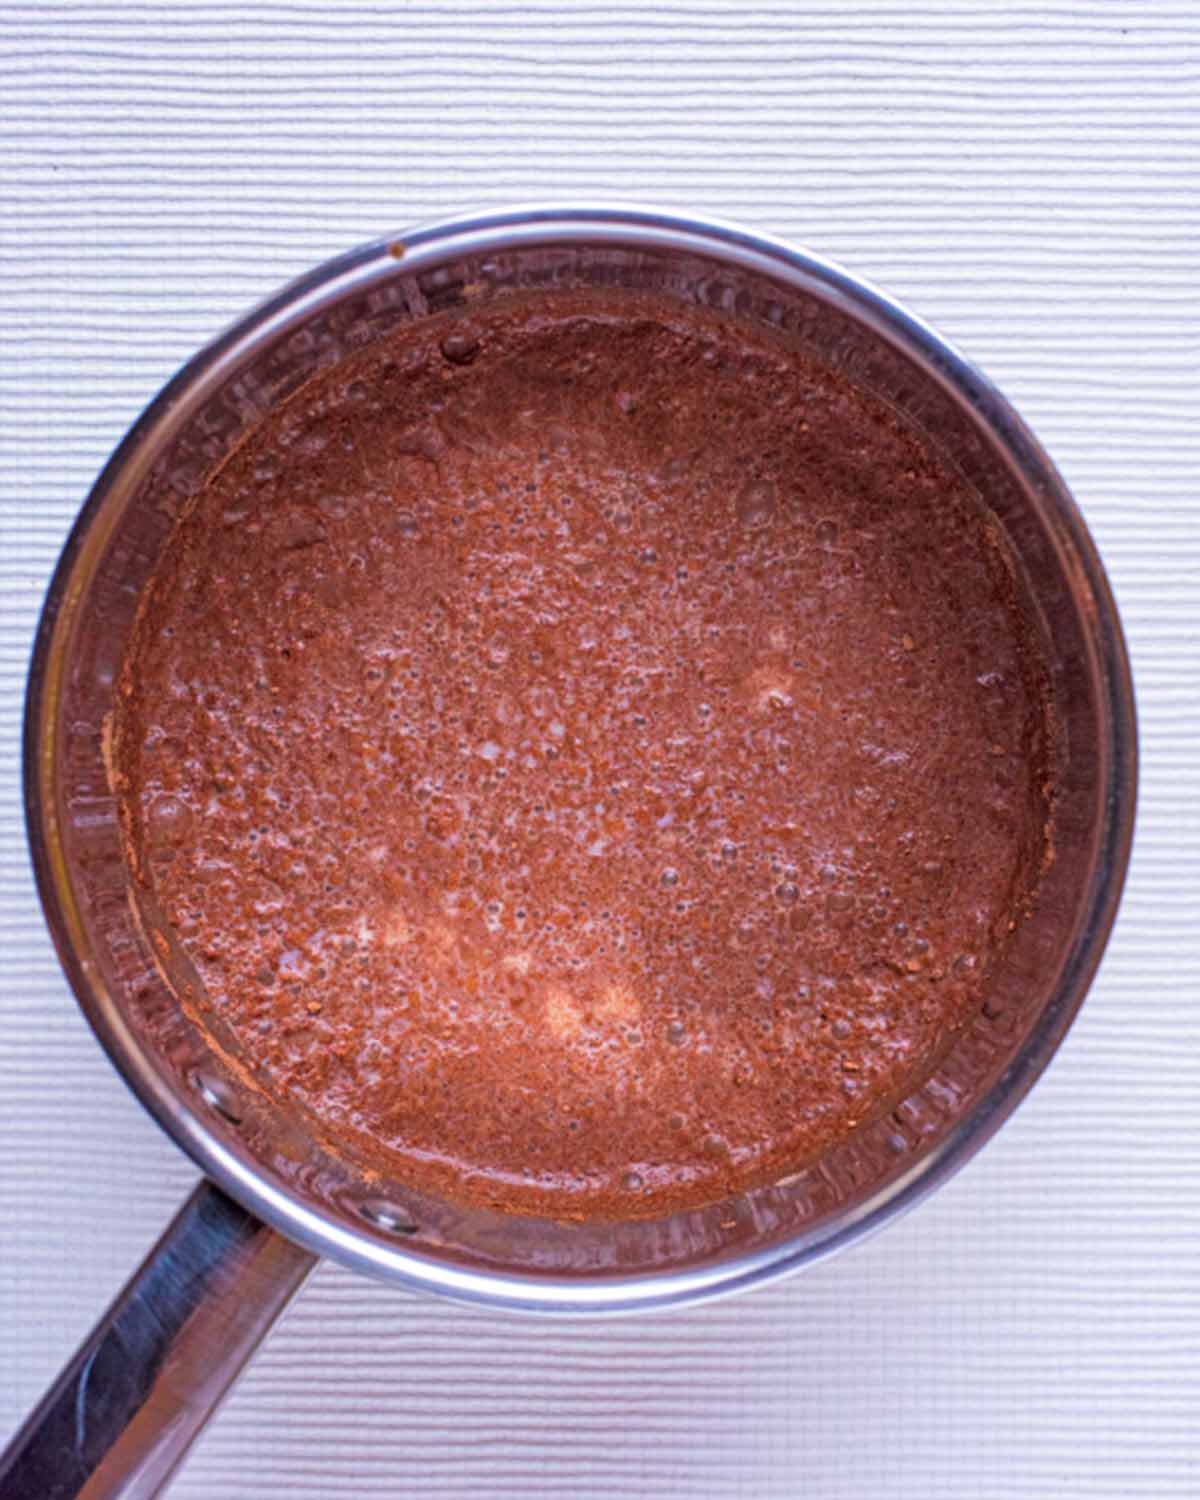 A saucepan containing hot chocolate.